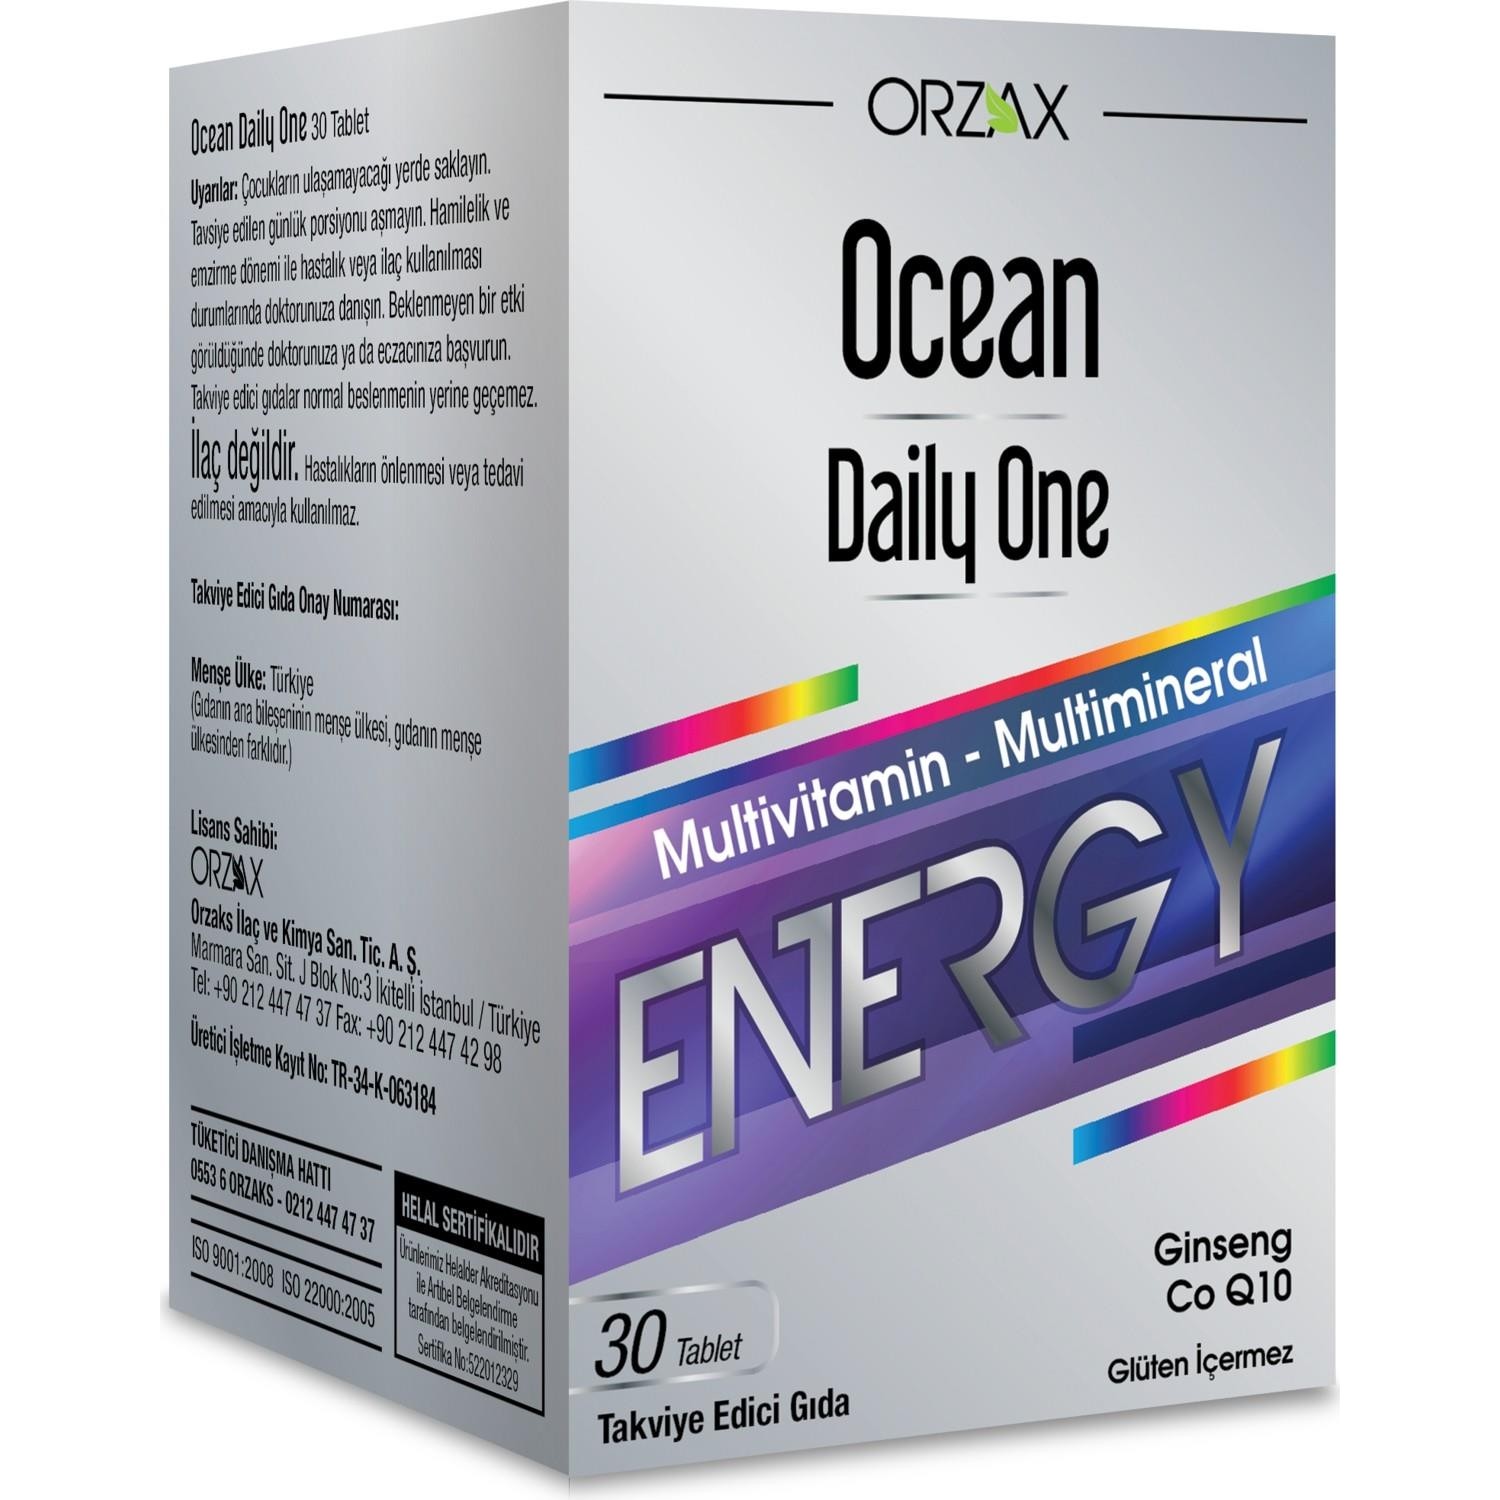 Пищевая добавка Orzax Ocean Daily One Energy, 30 таблеток пищевая добавка orzax ocean daily one energy 30 таблеток пастилки pasthill orange